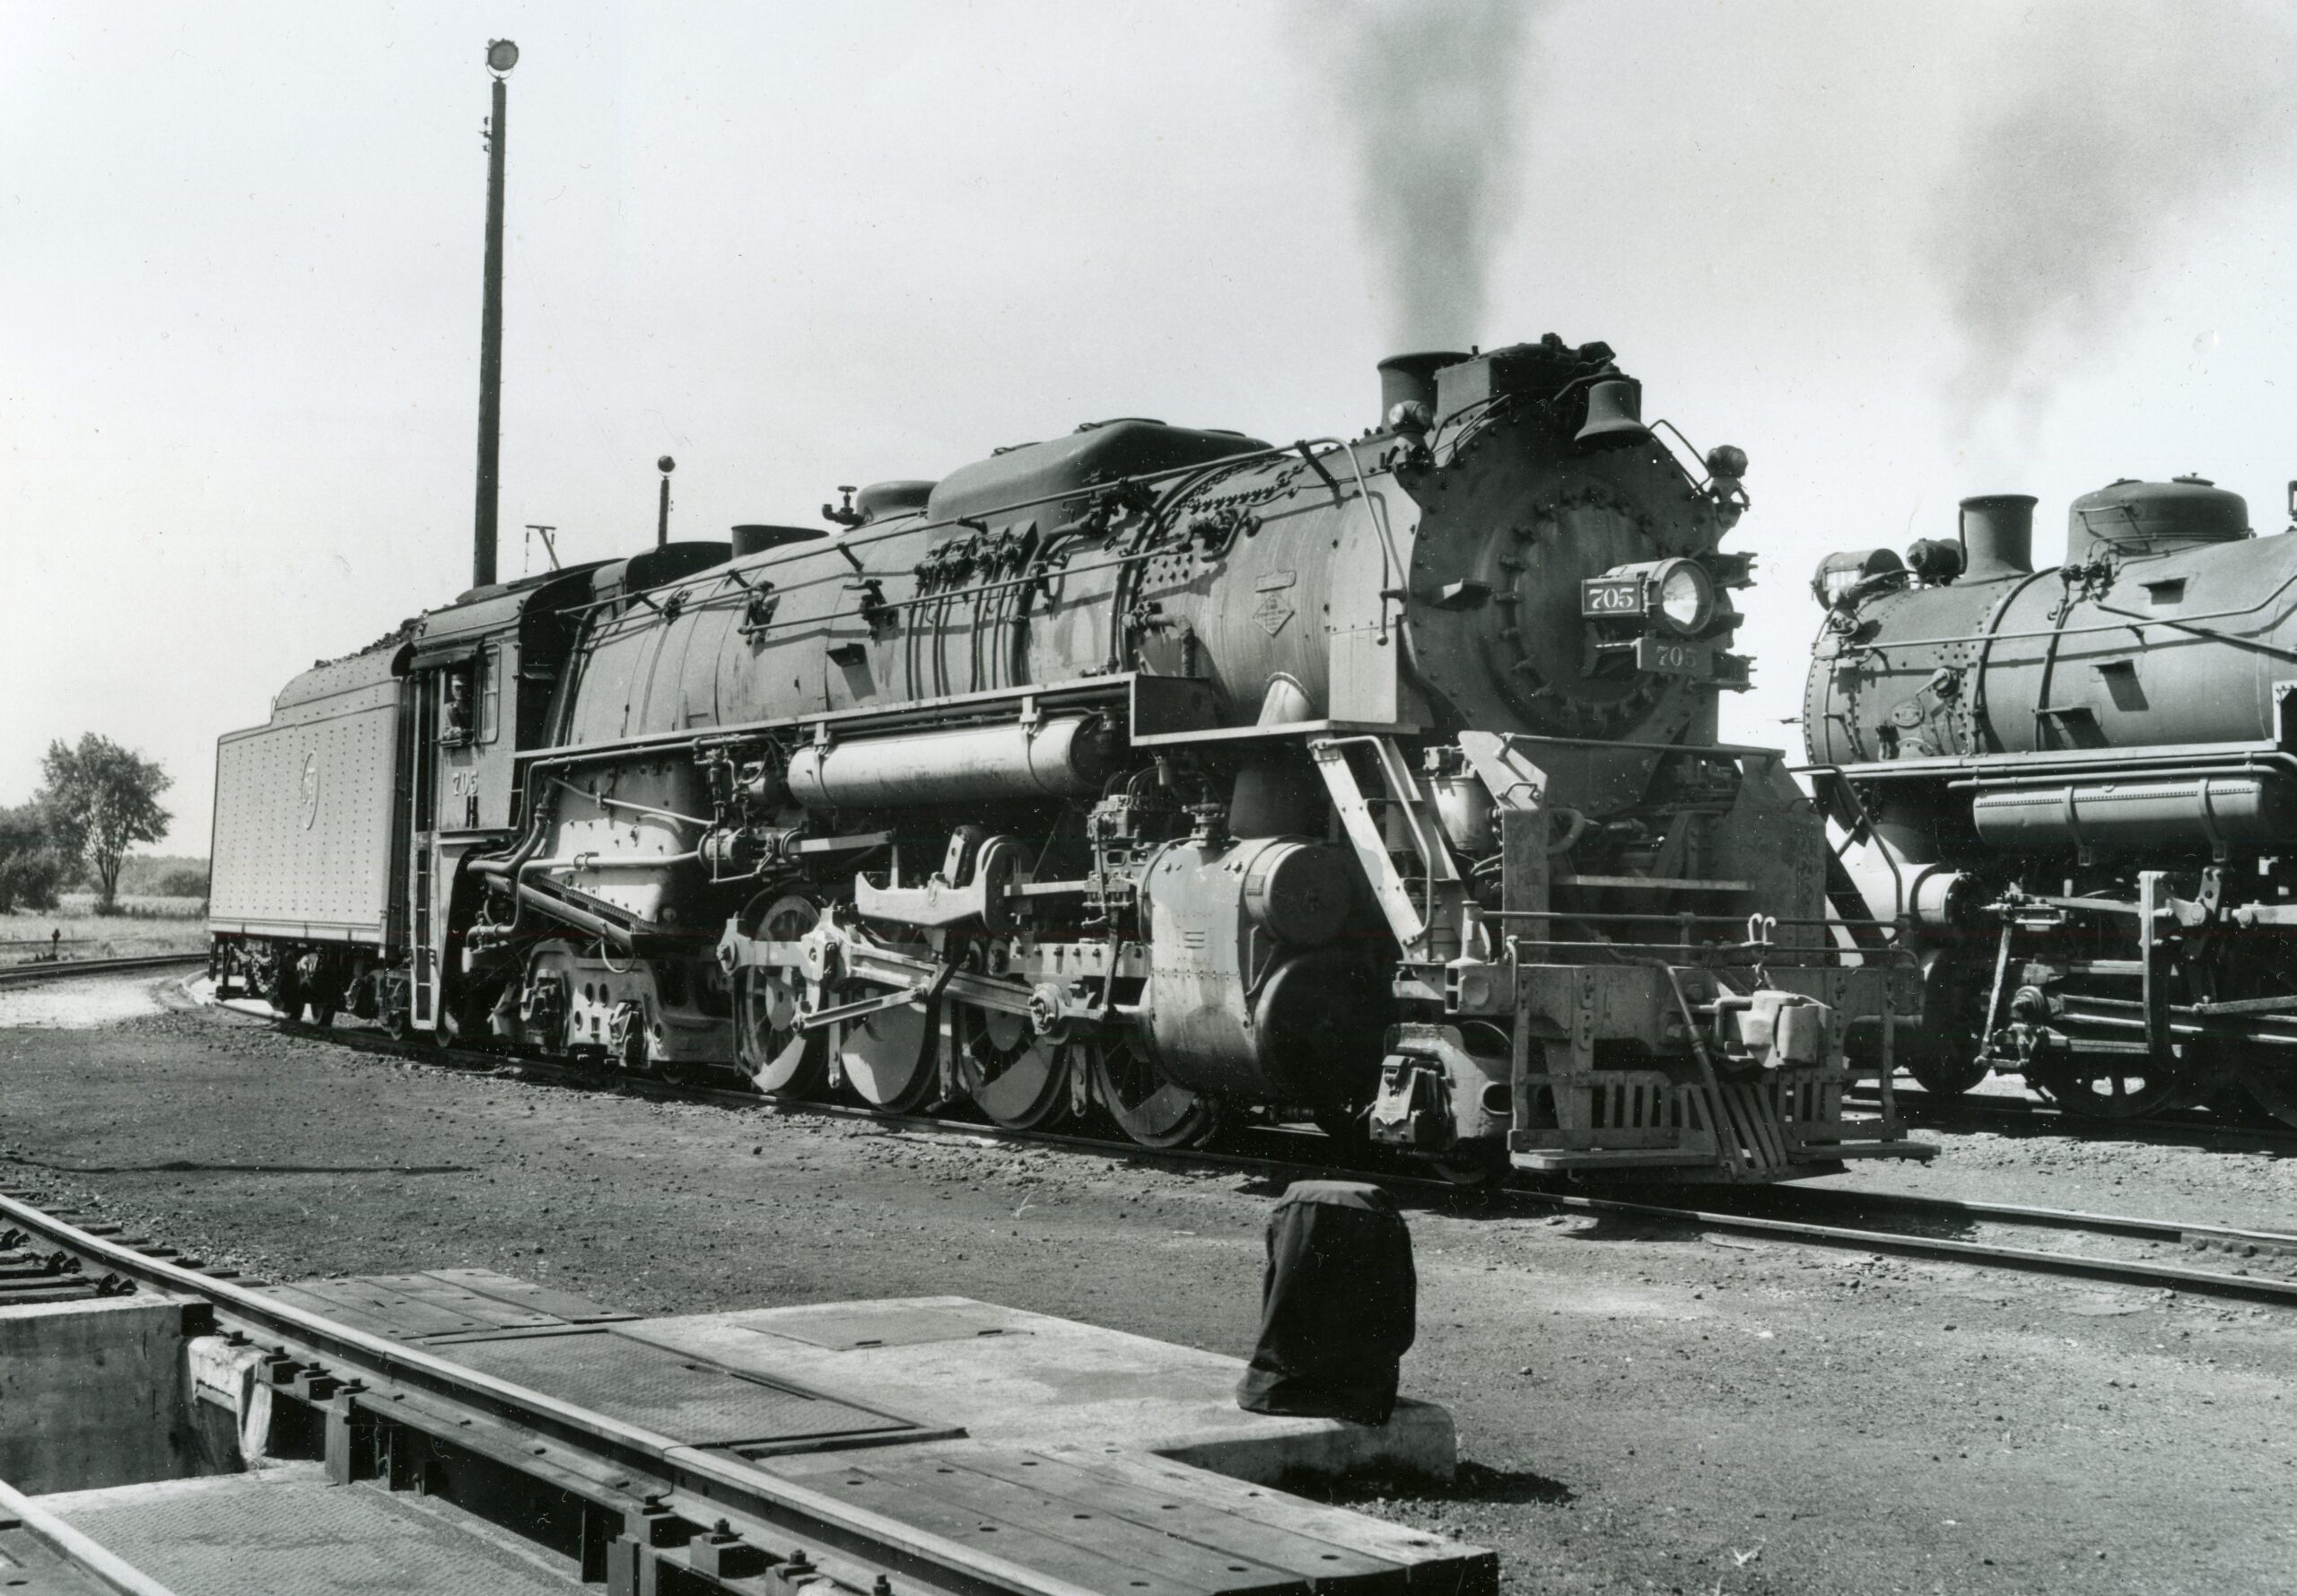 Detroit Toledo and Ironton Railroad | Springfield, Ohio | Class 2-8-4 #705 “Berkshire” steam locomotive | July 28, 1952 | R.L. Long photograph